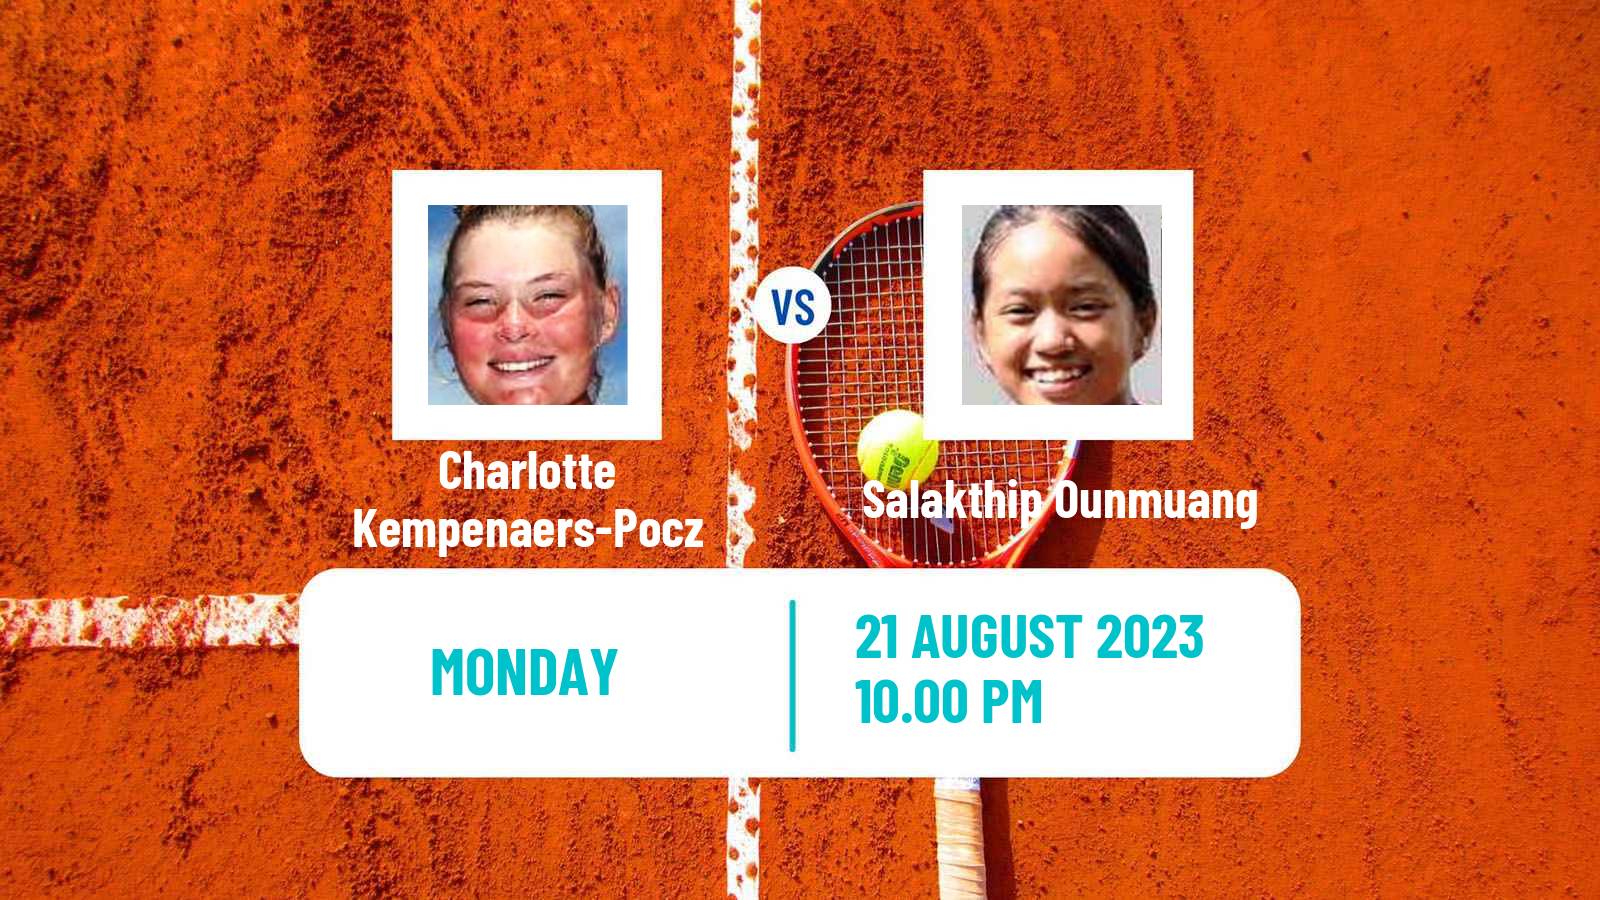 Tennis ITF W15 Nakhon Si Thammarat 5 Women Charlotte Kempenaers-Pocz - Salakthip Ounmuang